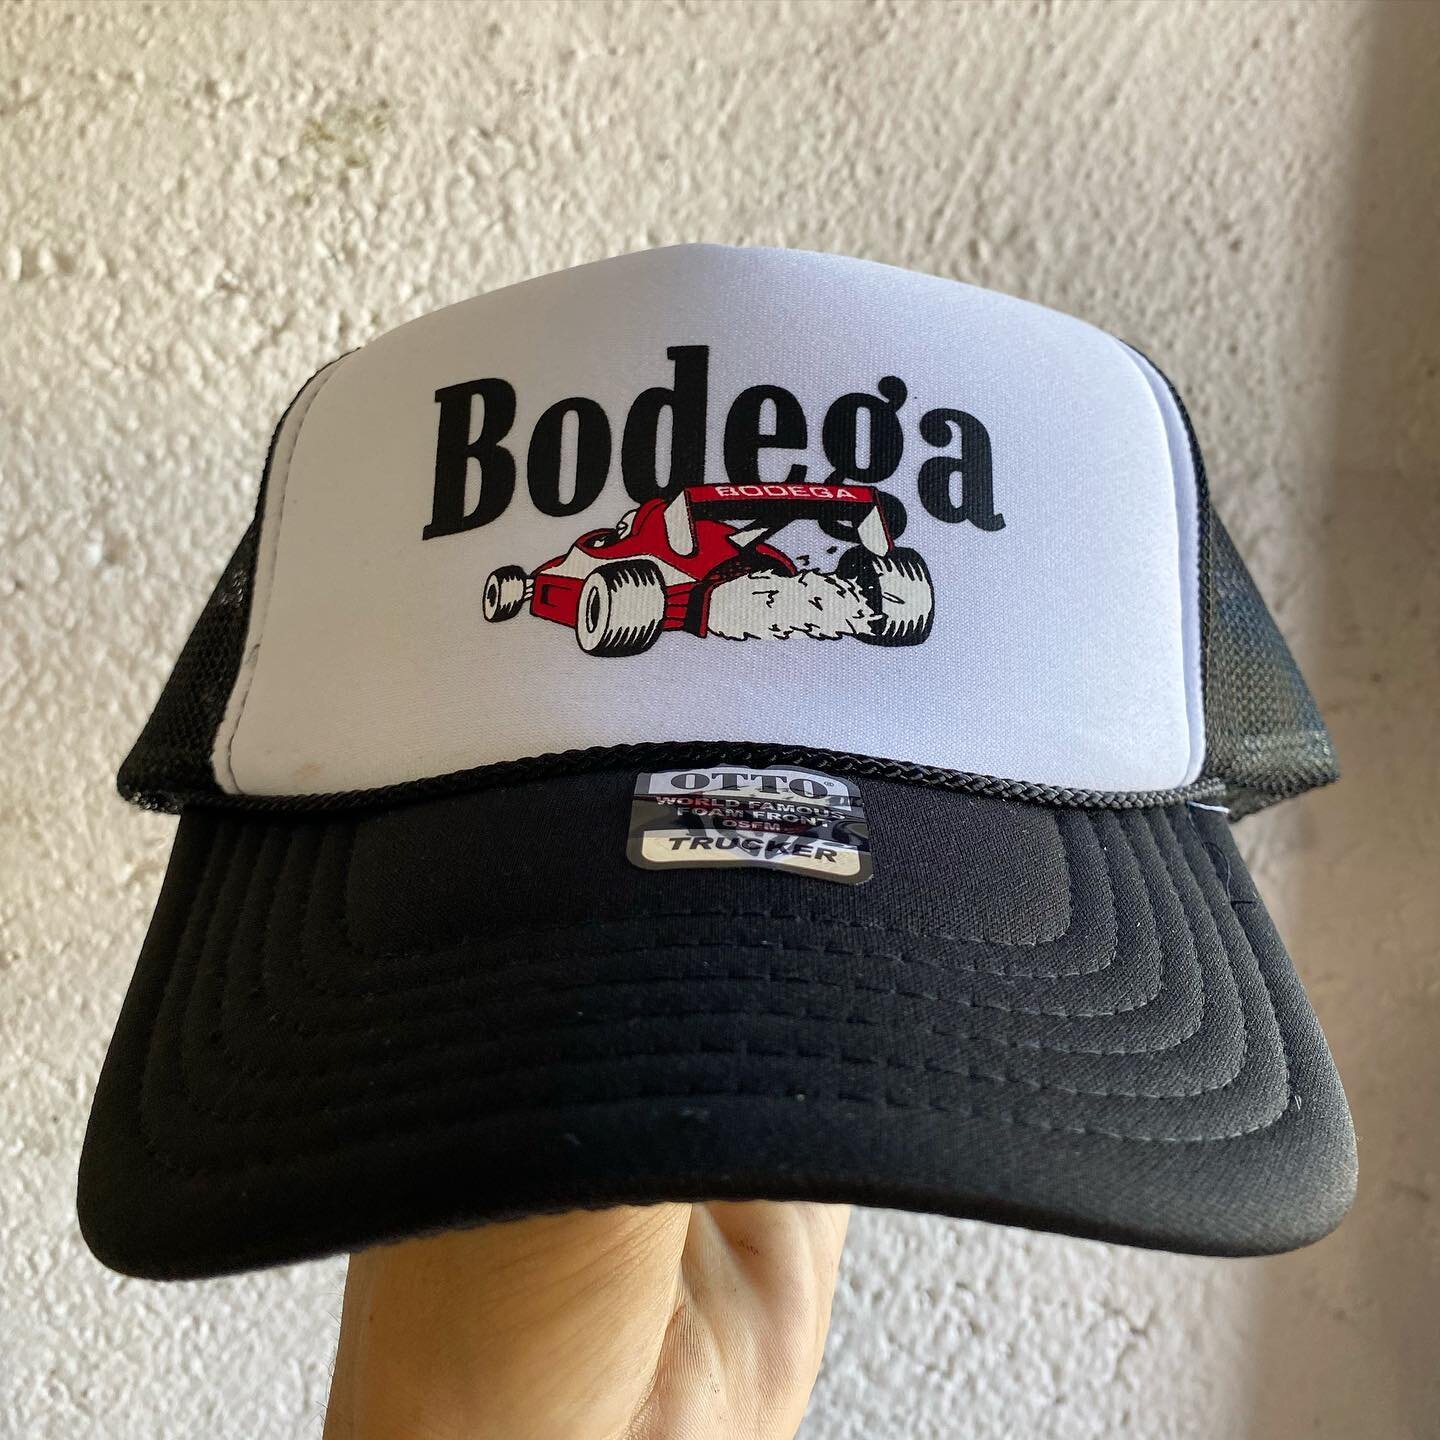 SCREEN PRINTED trucker hats for @bodegataqueria 🔥🏎
&bull;
&bull;
#f1miami #bodegataqueria #screenprinting #screenprint #truckerhats #hats #miami #printing #screenprinthats #screenprinttransfers